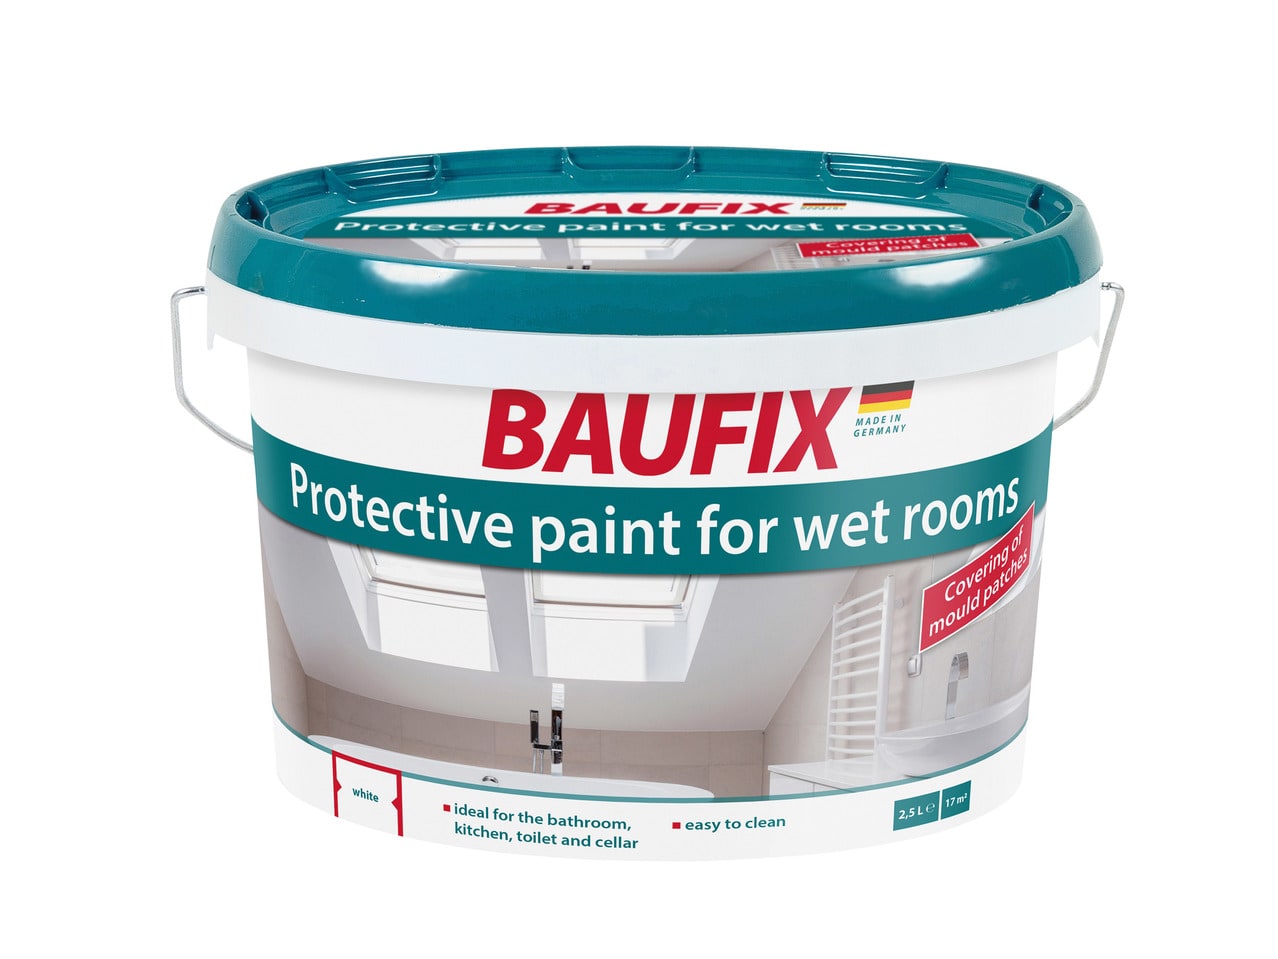 Baufix Protective Paint for Wet Rooms1